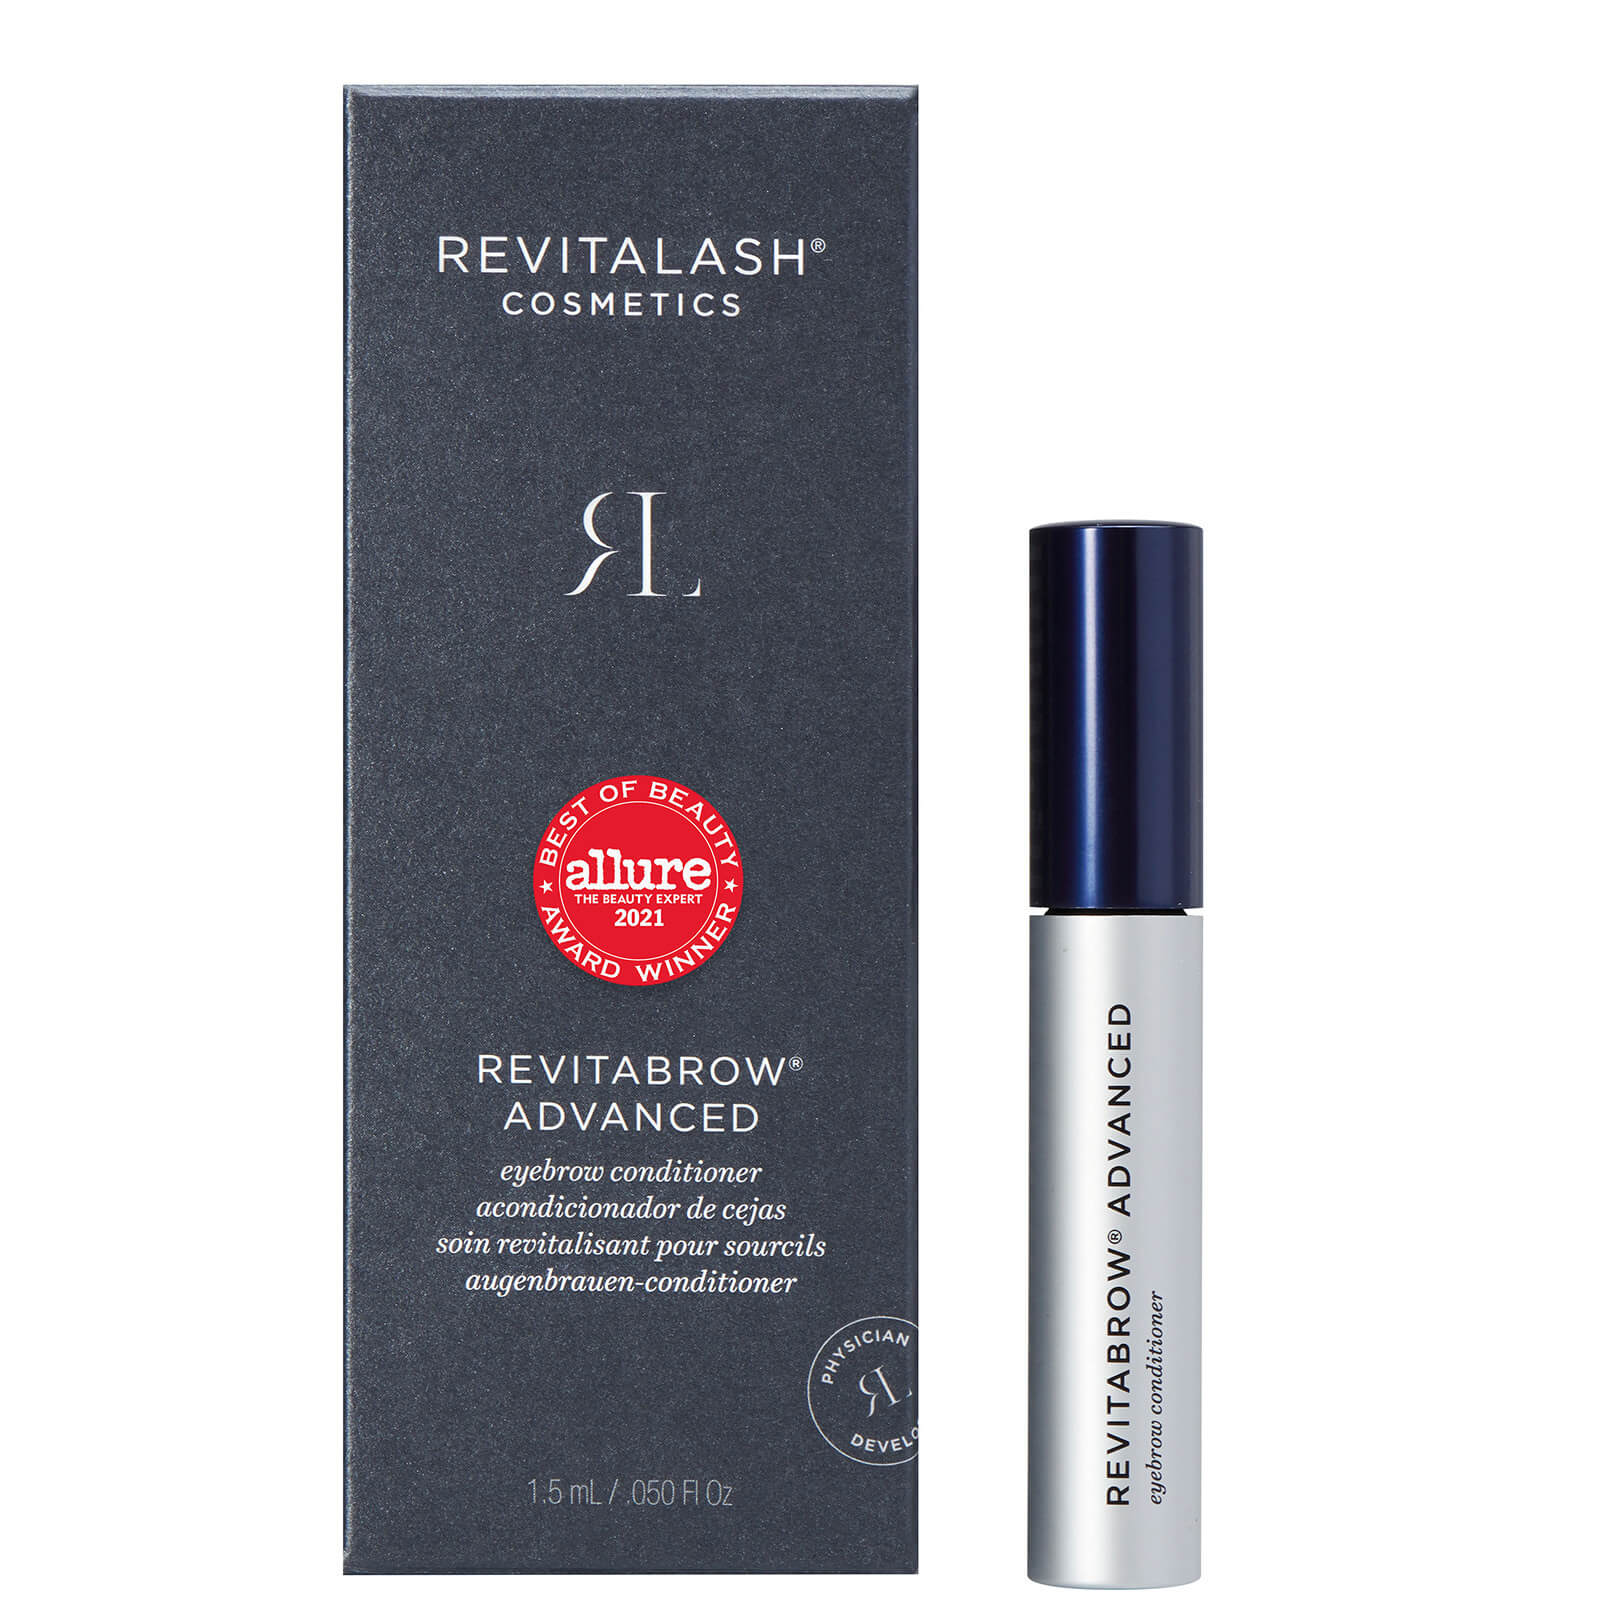 Revitalash Revitabrow Advanced Eyebrow Conditioner 1.5ml In Gray